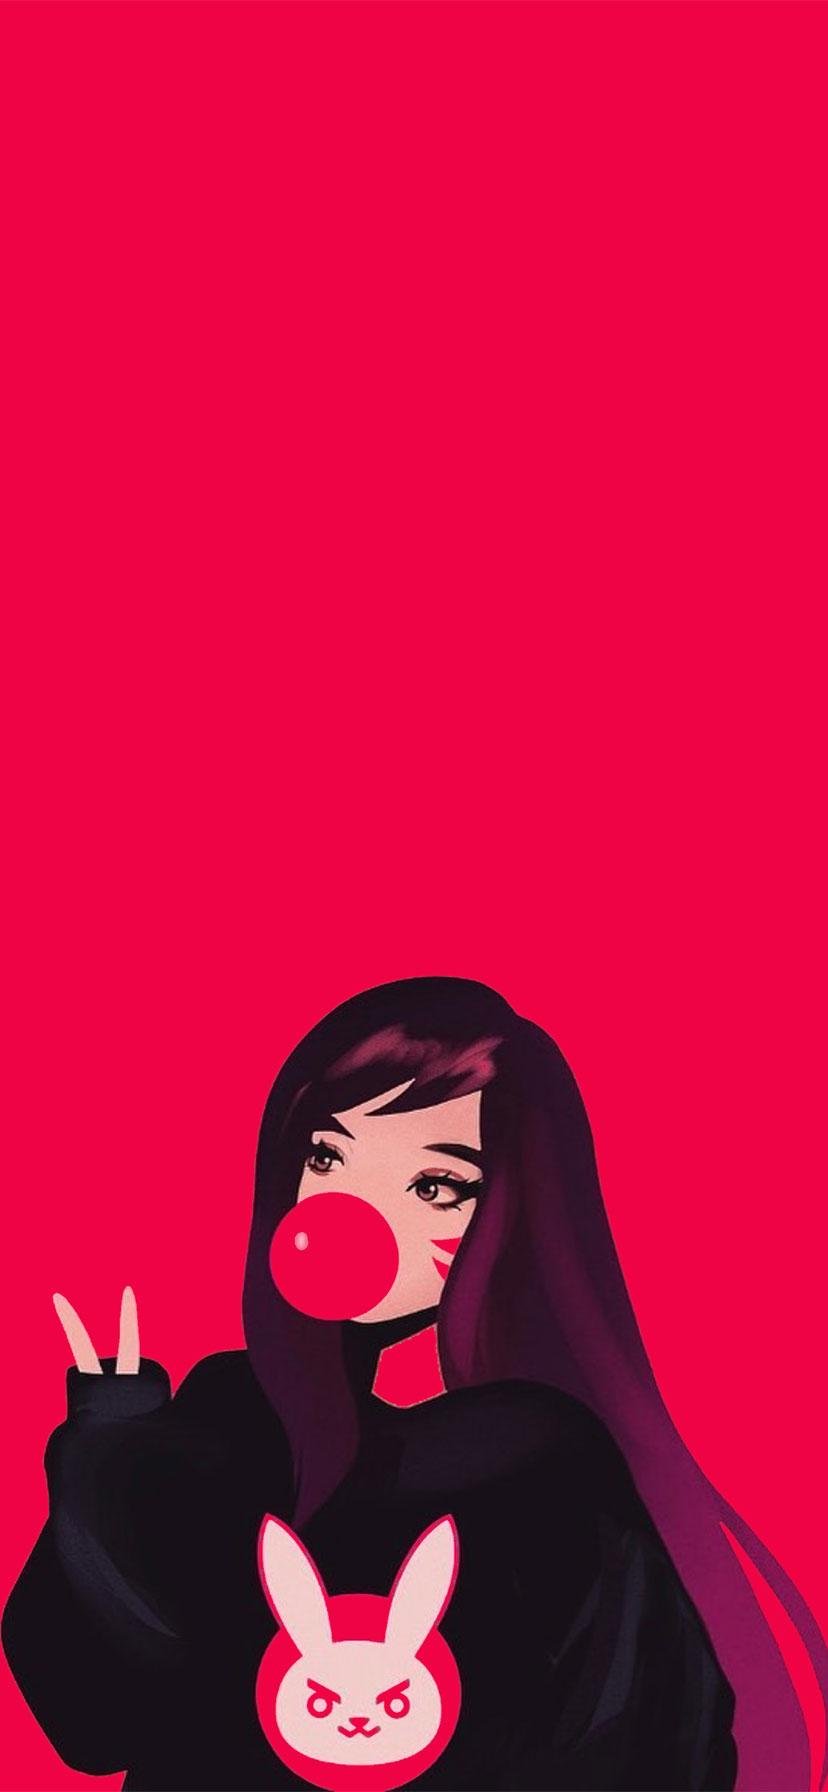 Download Cute Girl Vector Art Profile Picture Wallpaper